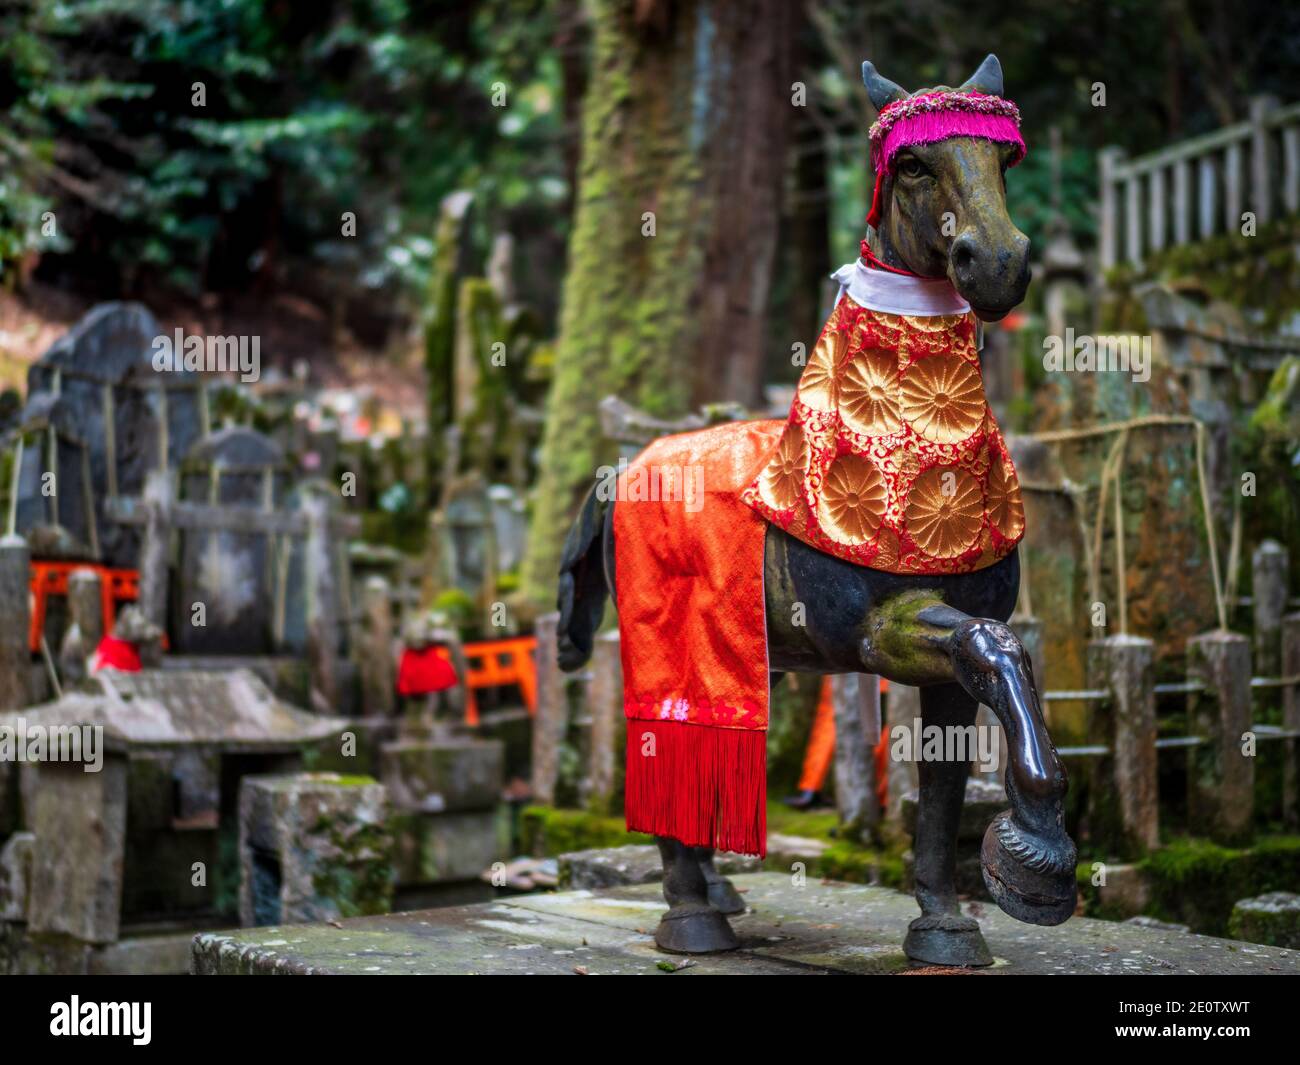 Pferdesstatue Fushimi Inari Shrine Kyoto Japan. Statue des Fushimi Inari Horse in roten zeremoniellen Gewändern. Stockfoto